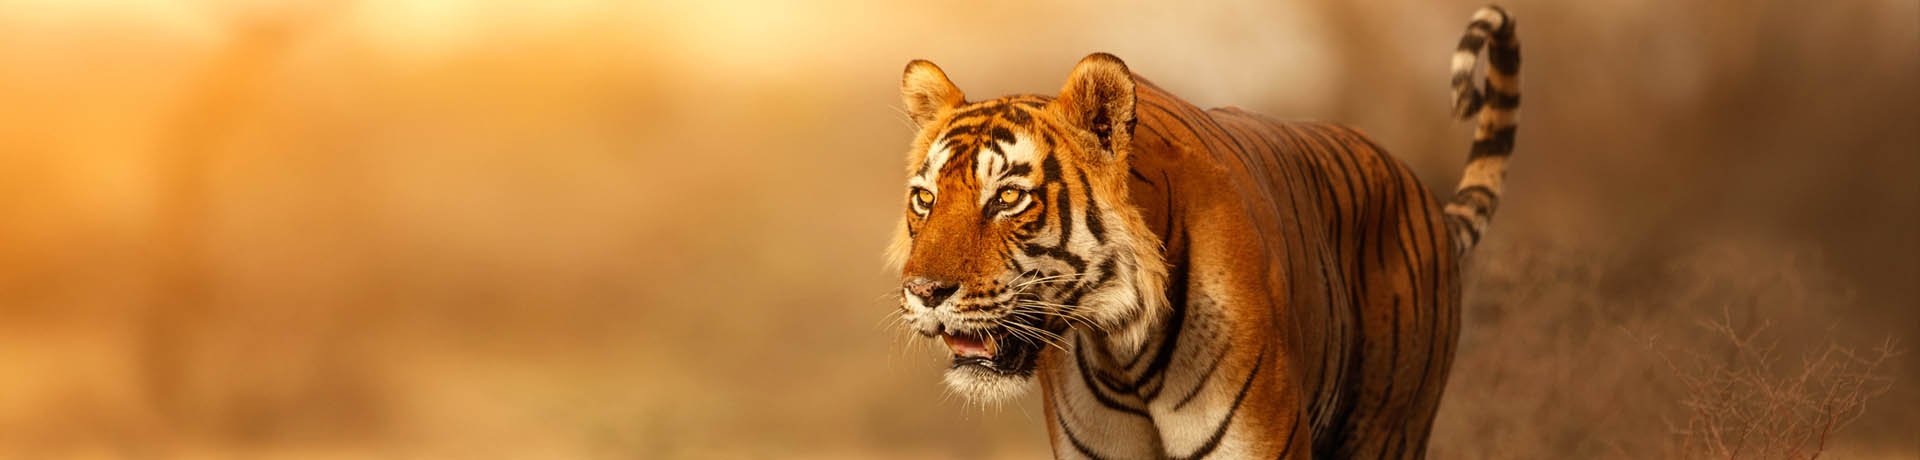 Tiger, Ranthambore